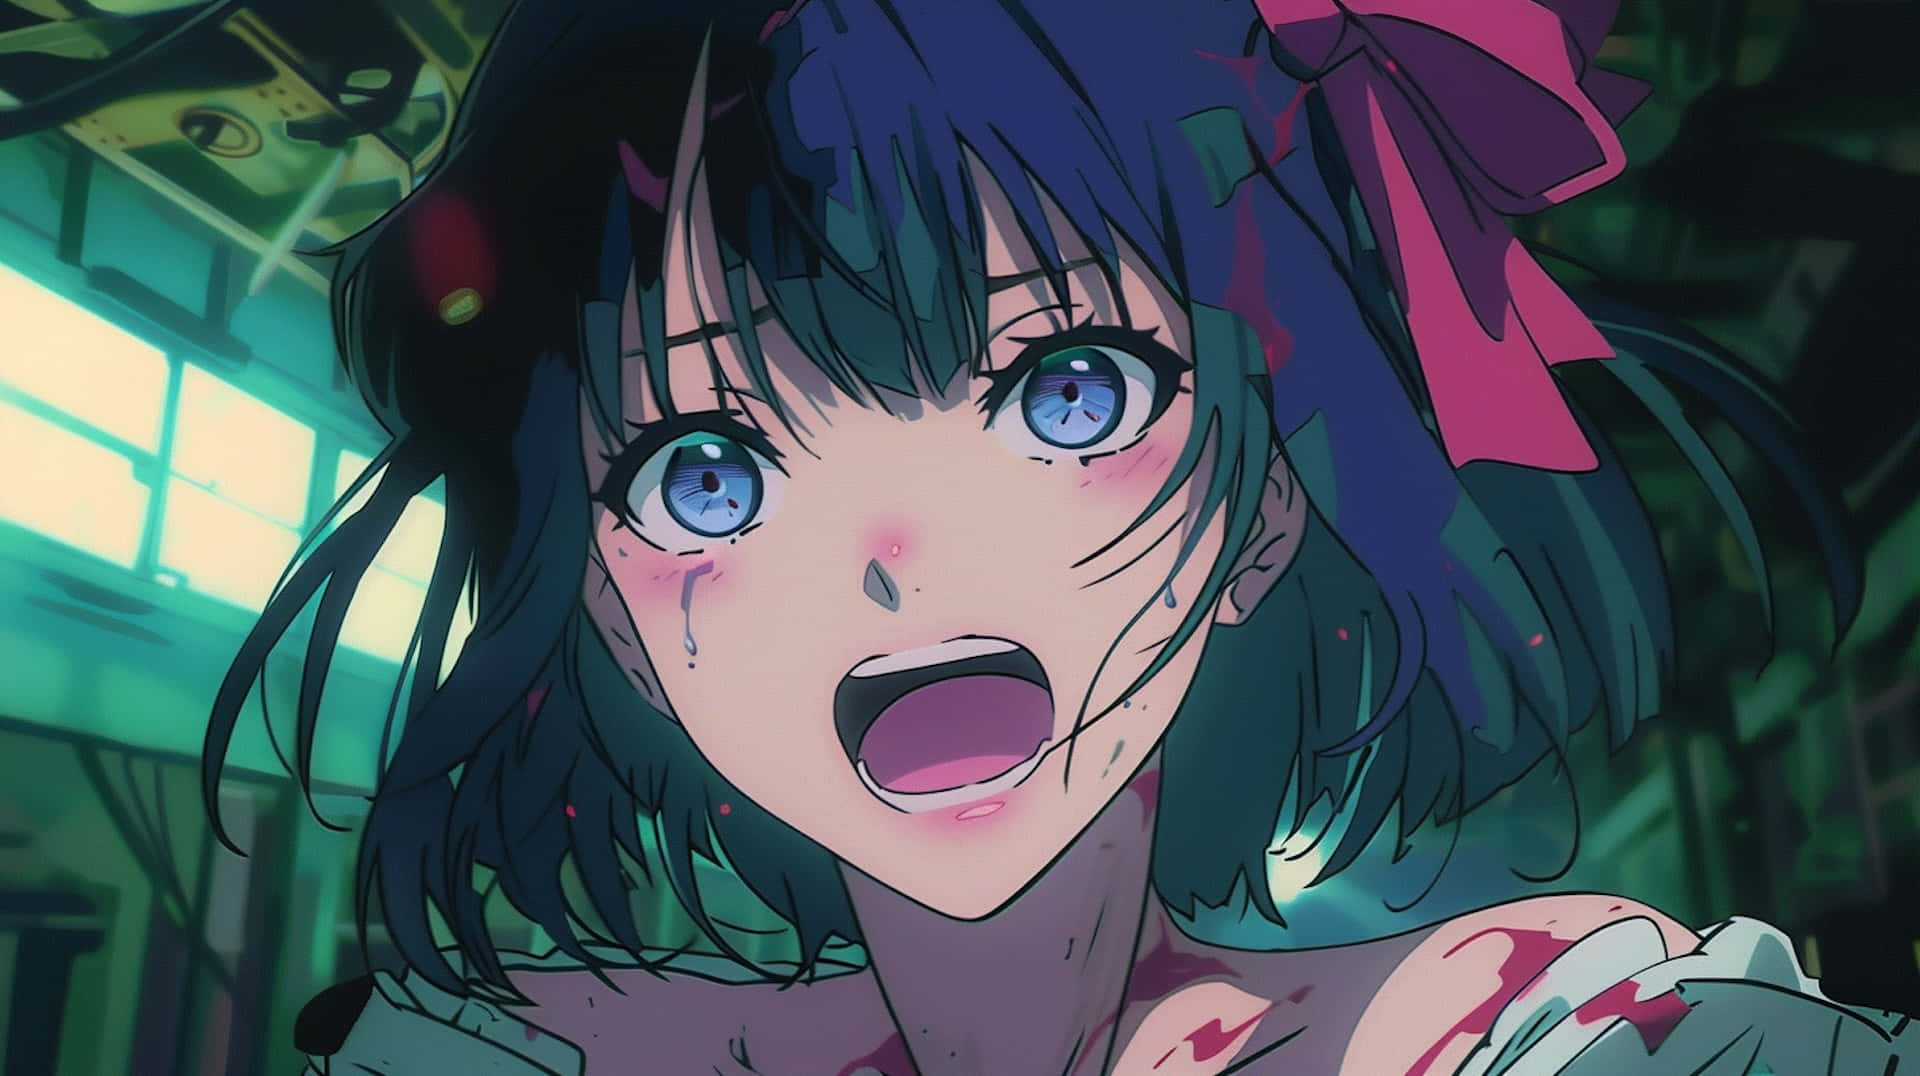 Shocked Anime Girl Expression Wallpaper